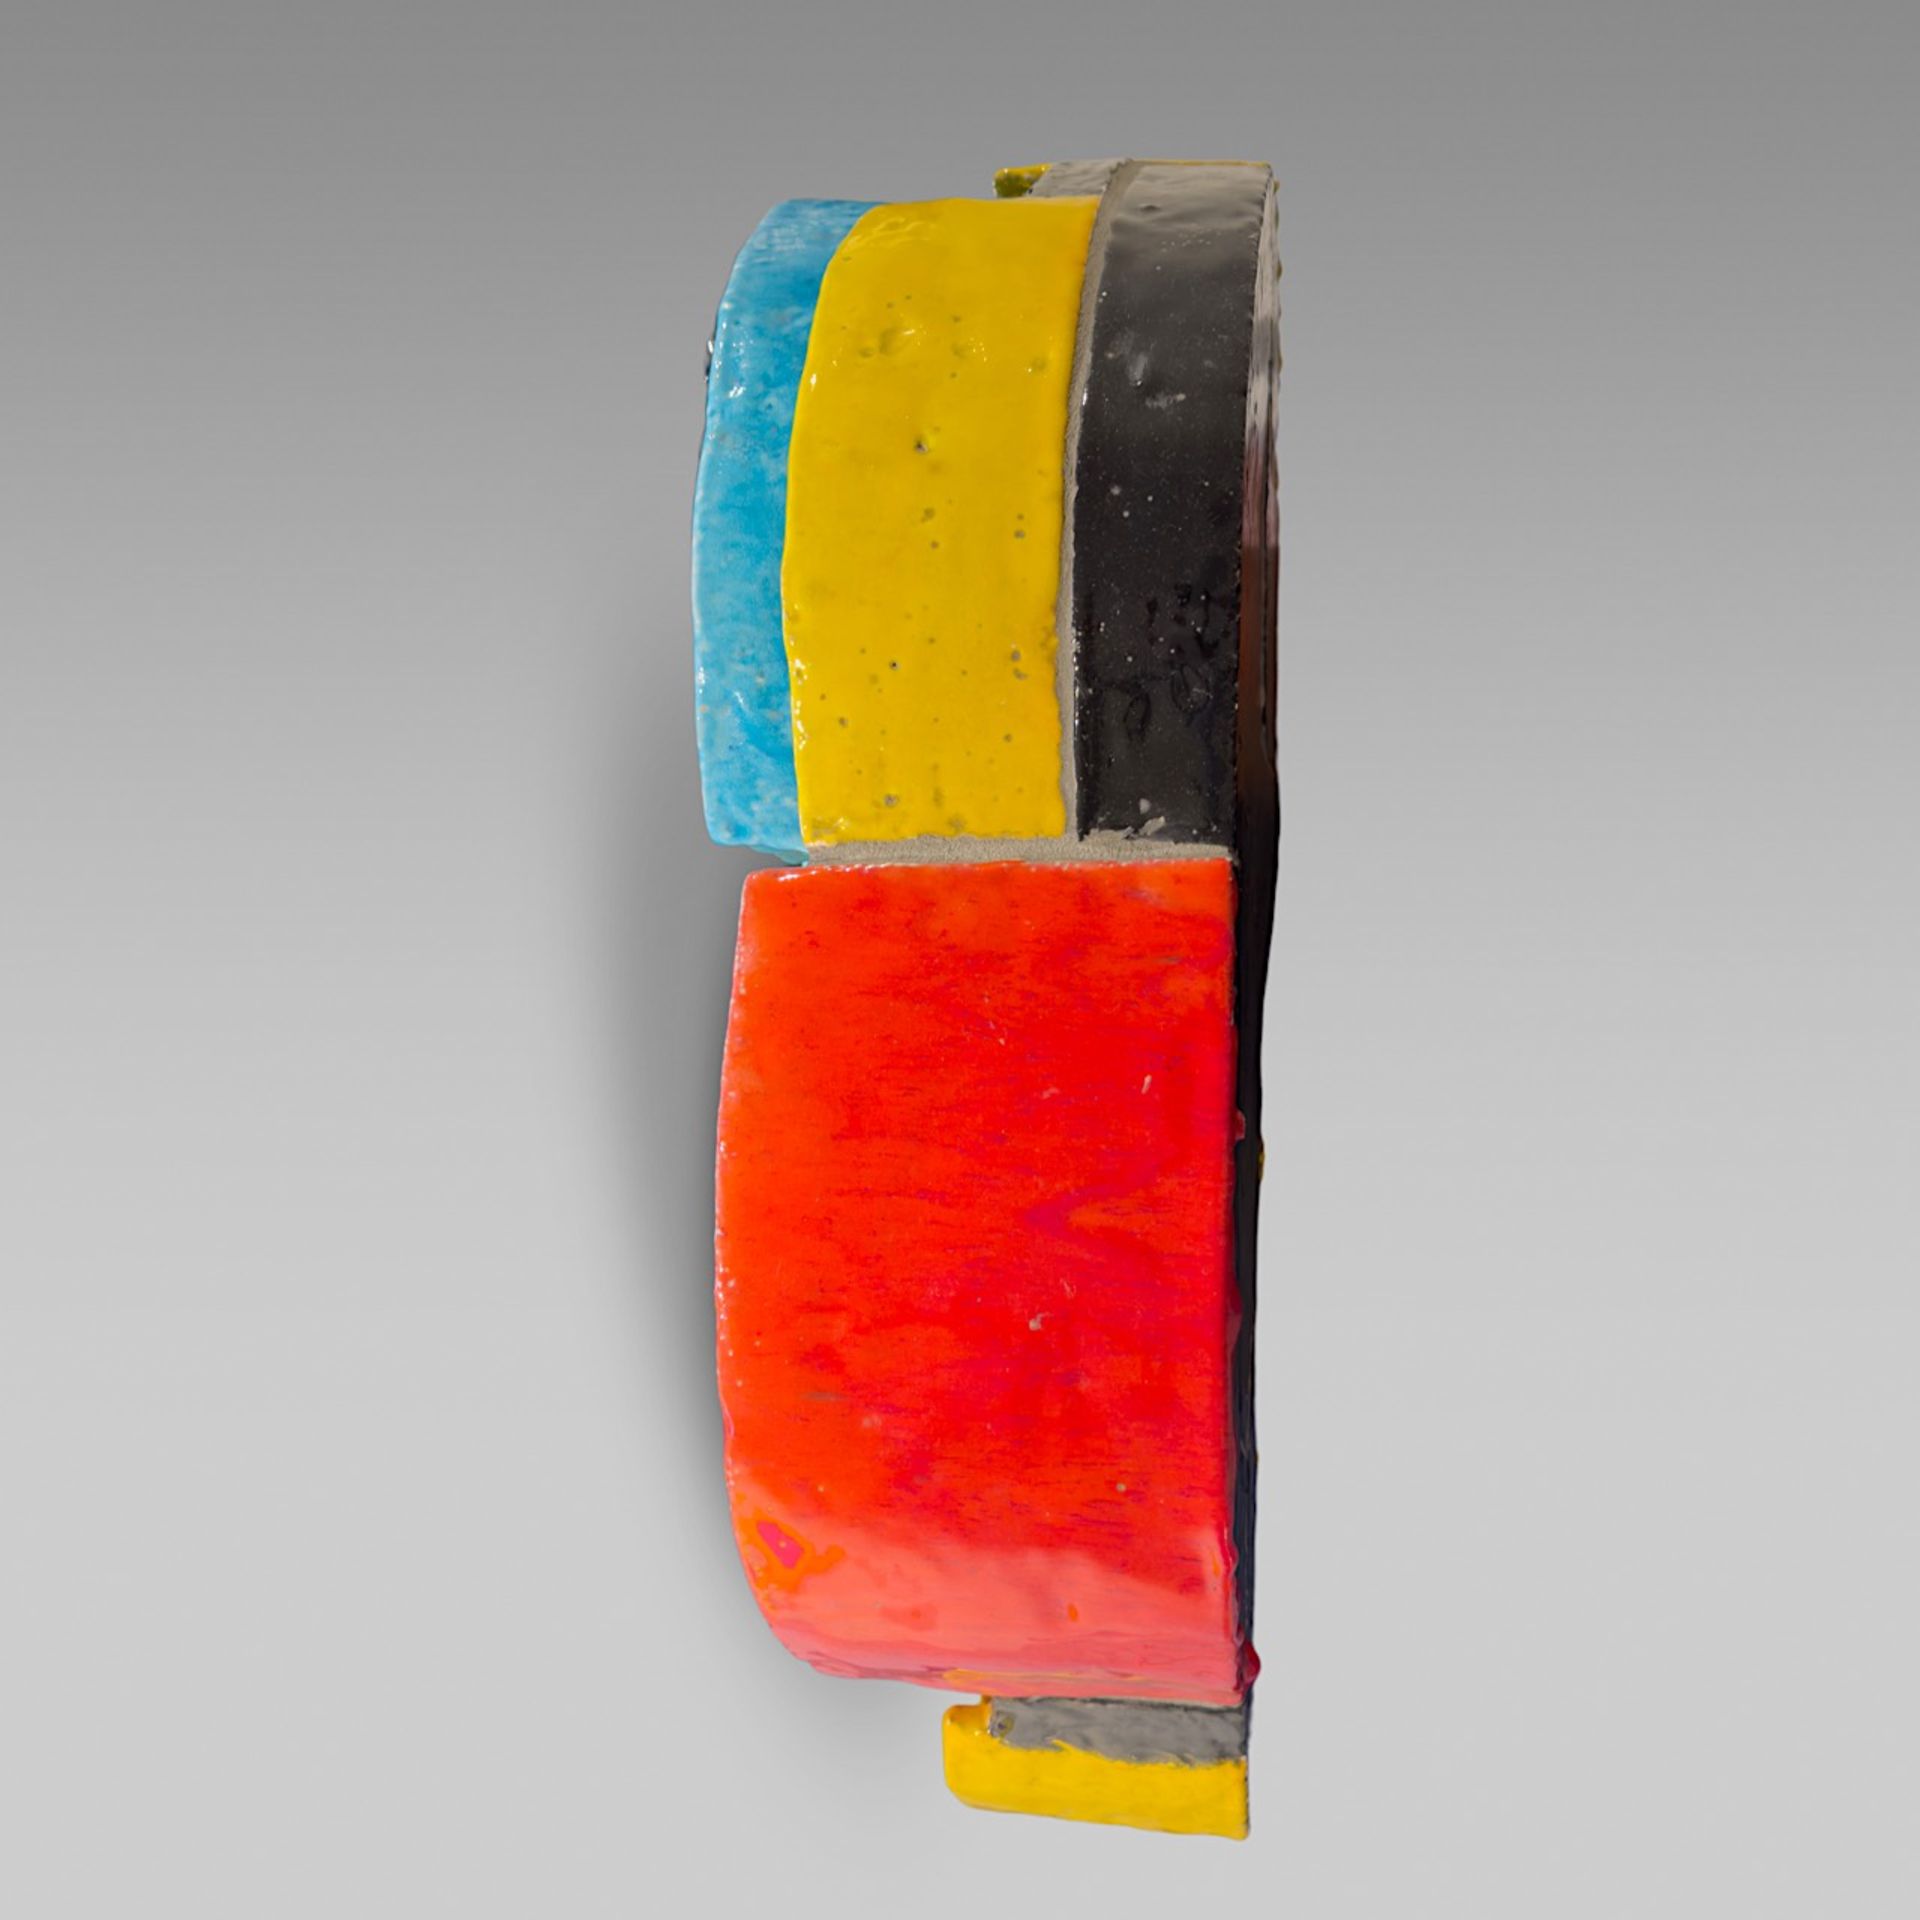 Karel Appel (1921-2006), head, 1975, glazed ceramic, H 81 cm - Image 5 of 5